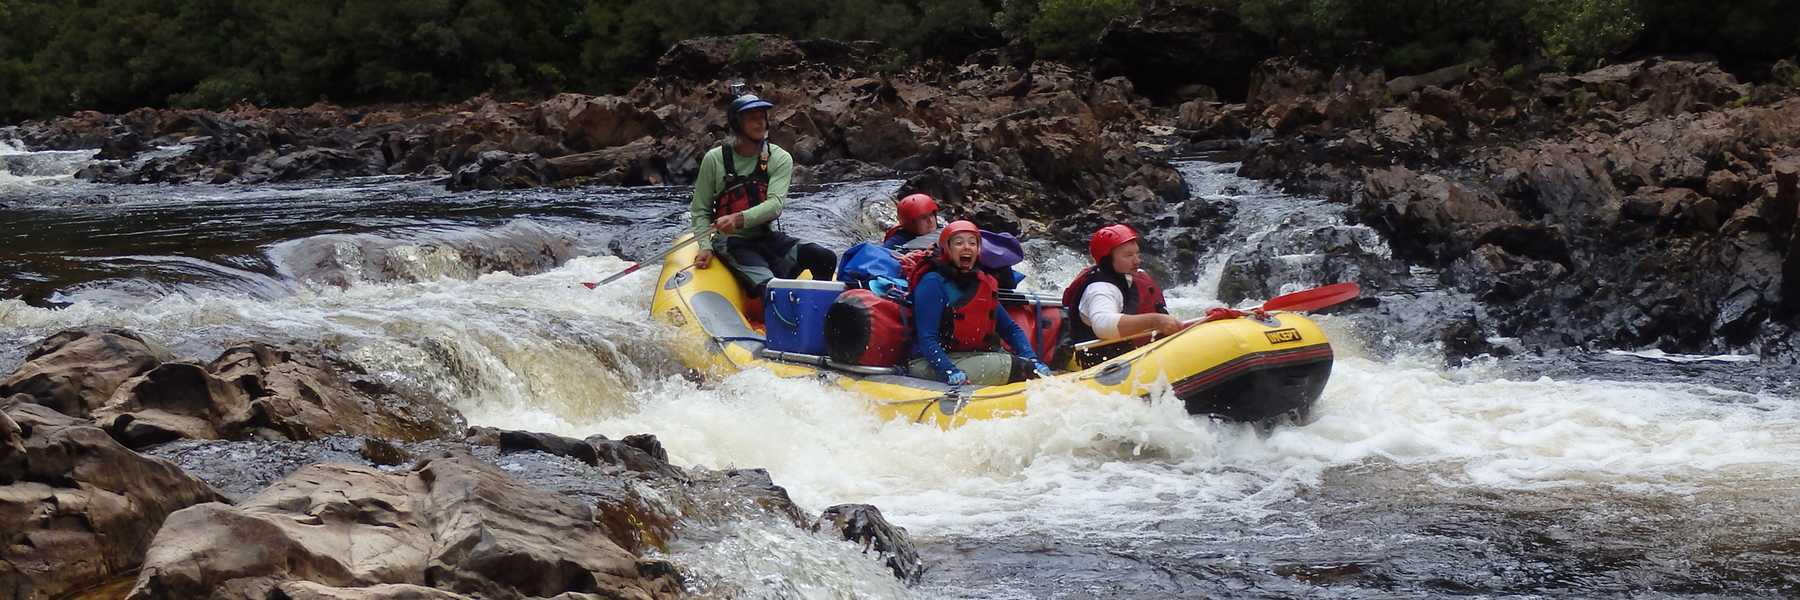 Brett and crew running a rapid on the upper Franklin River running a 